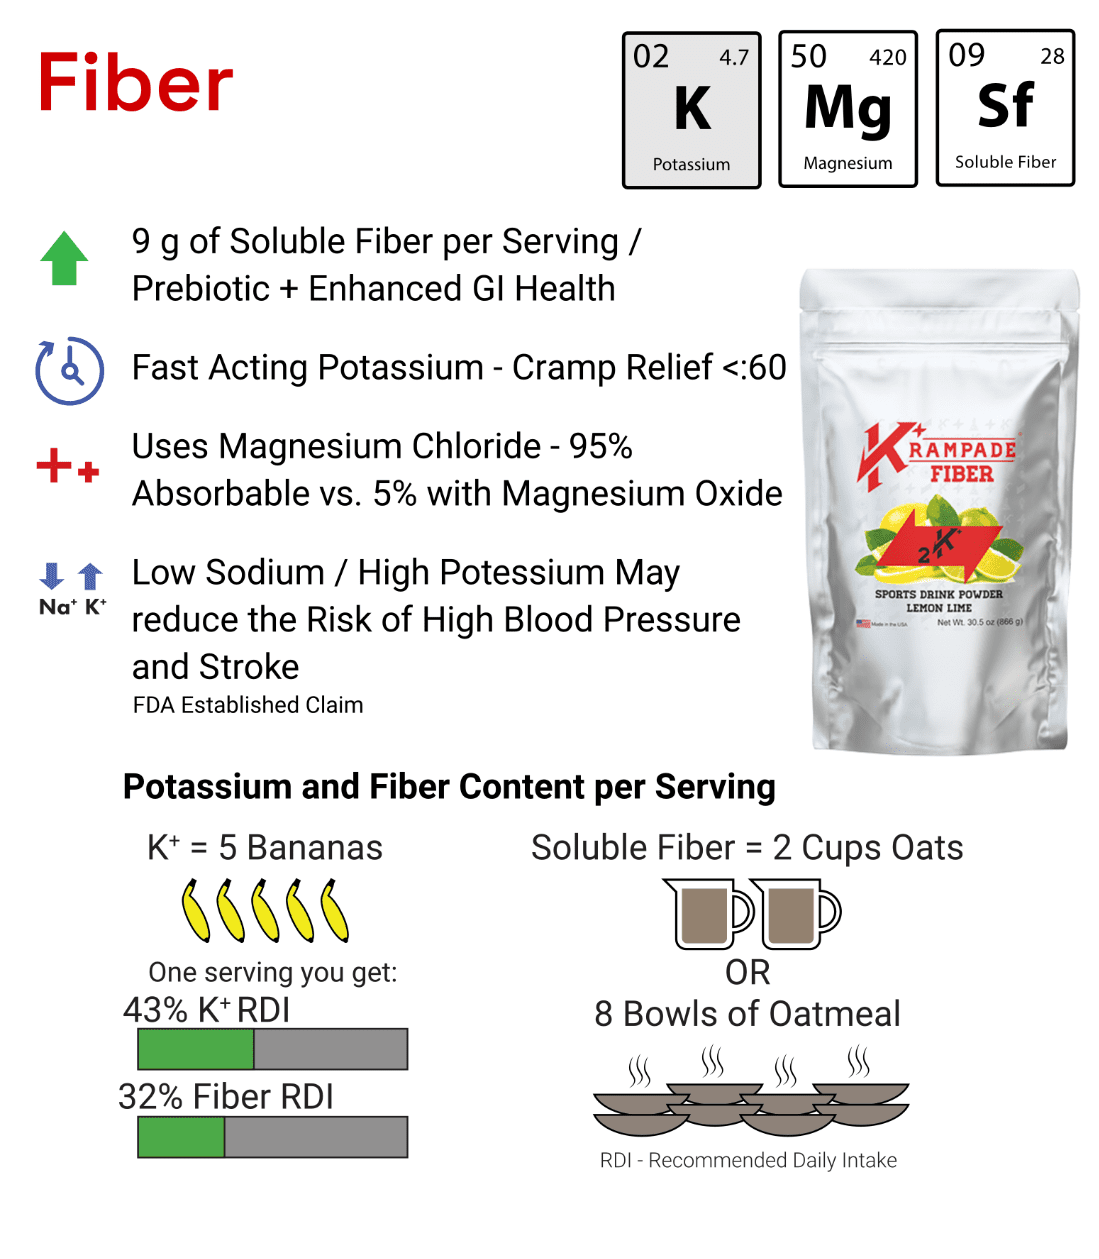 kp-fiber-img-1-a